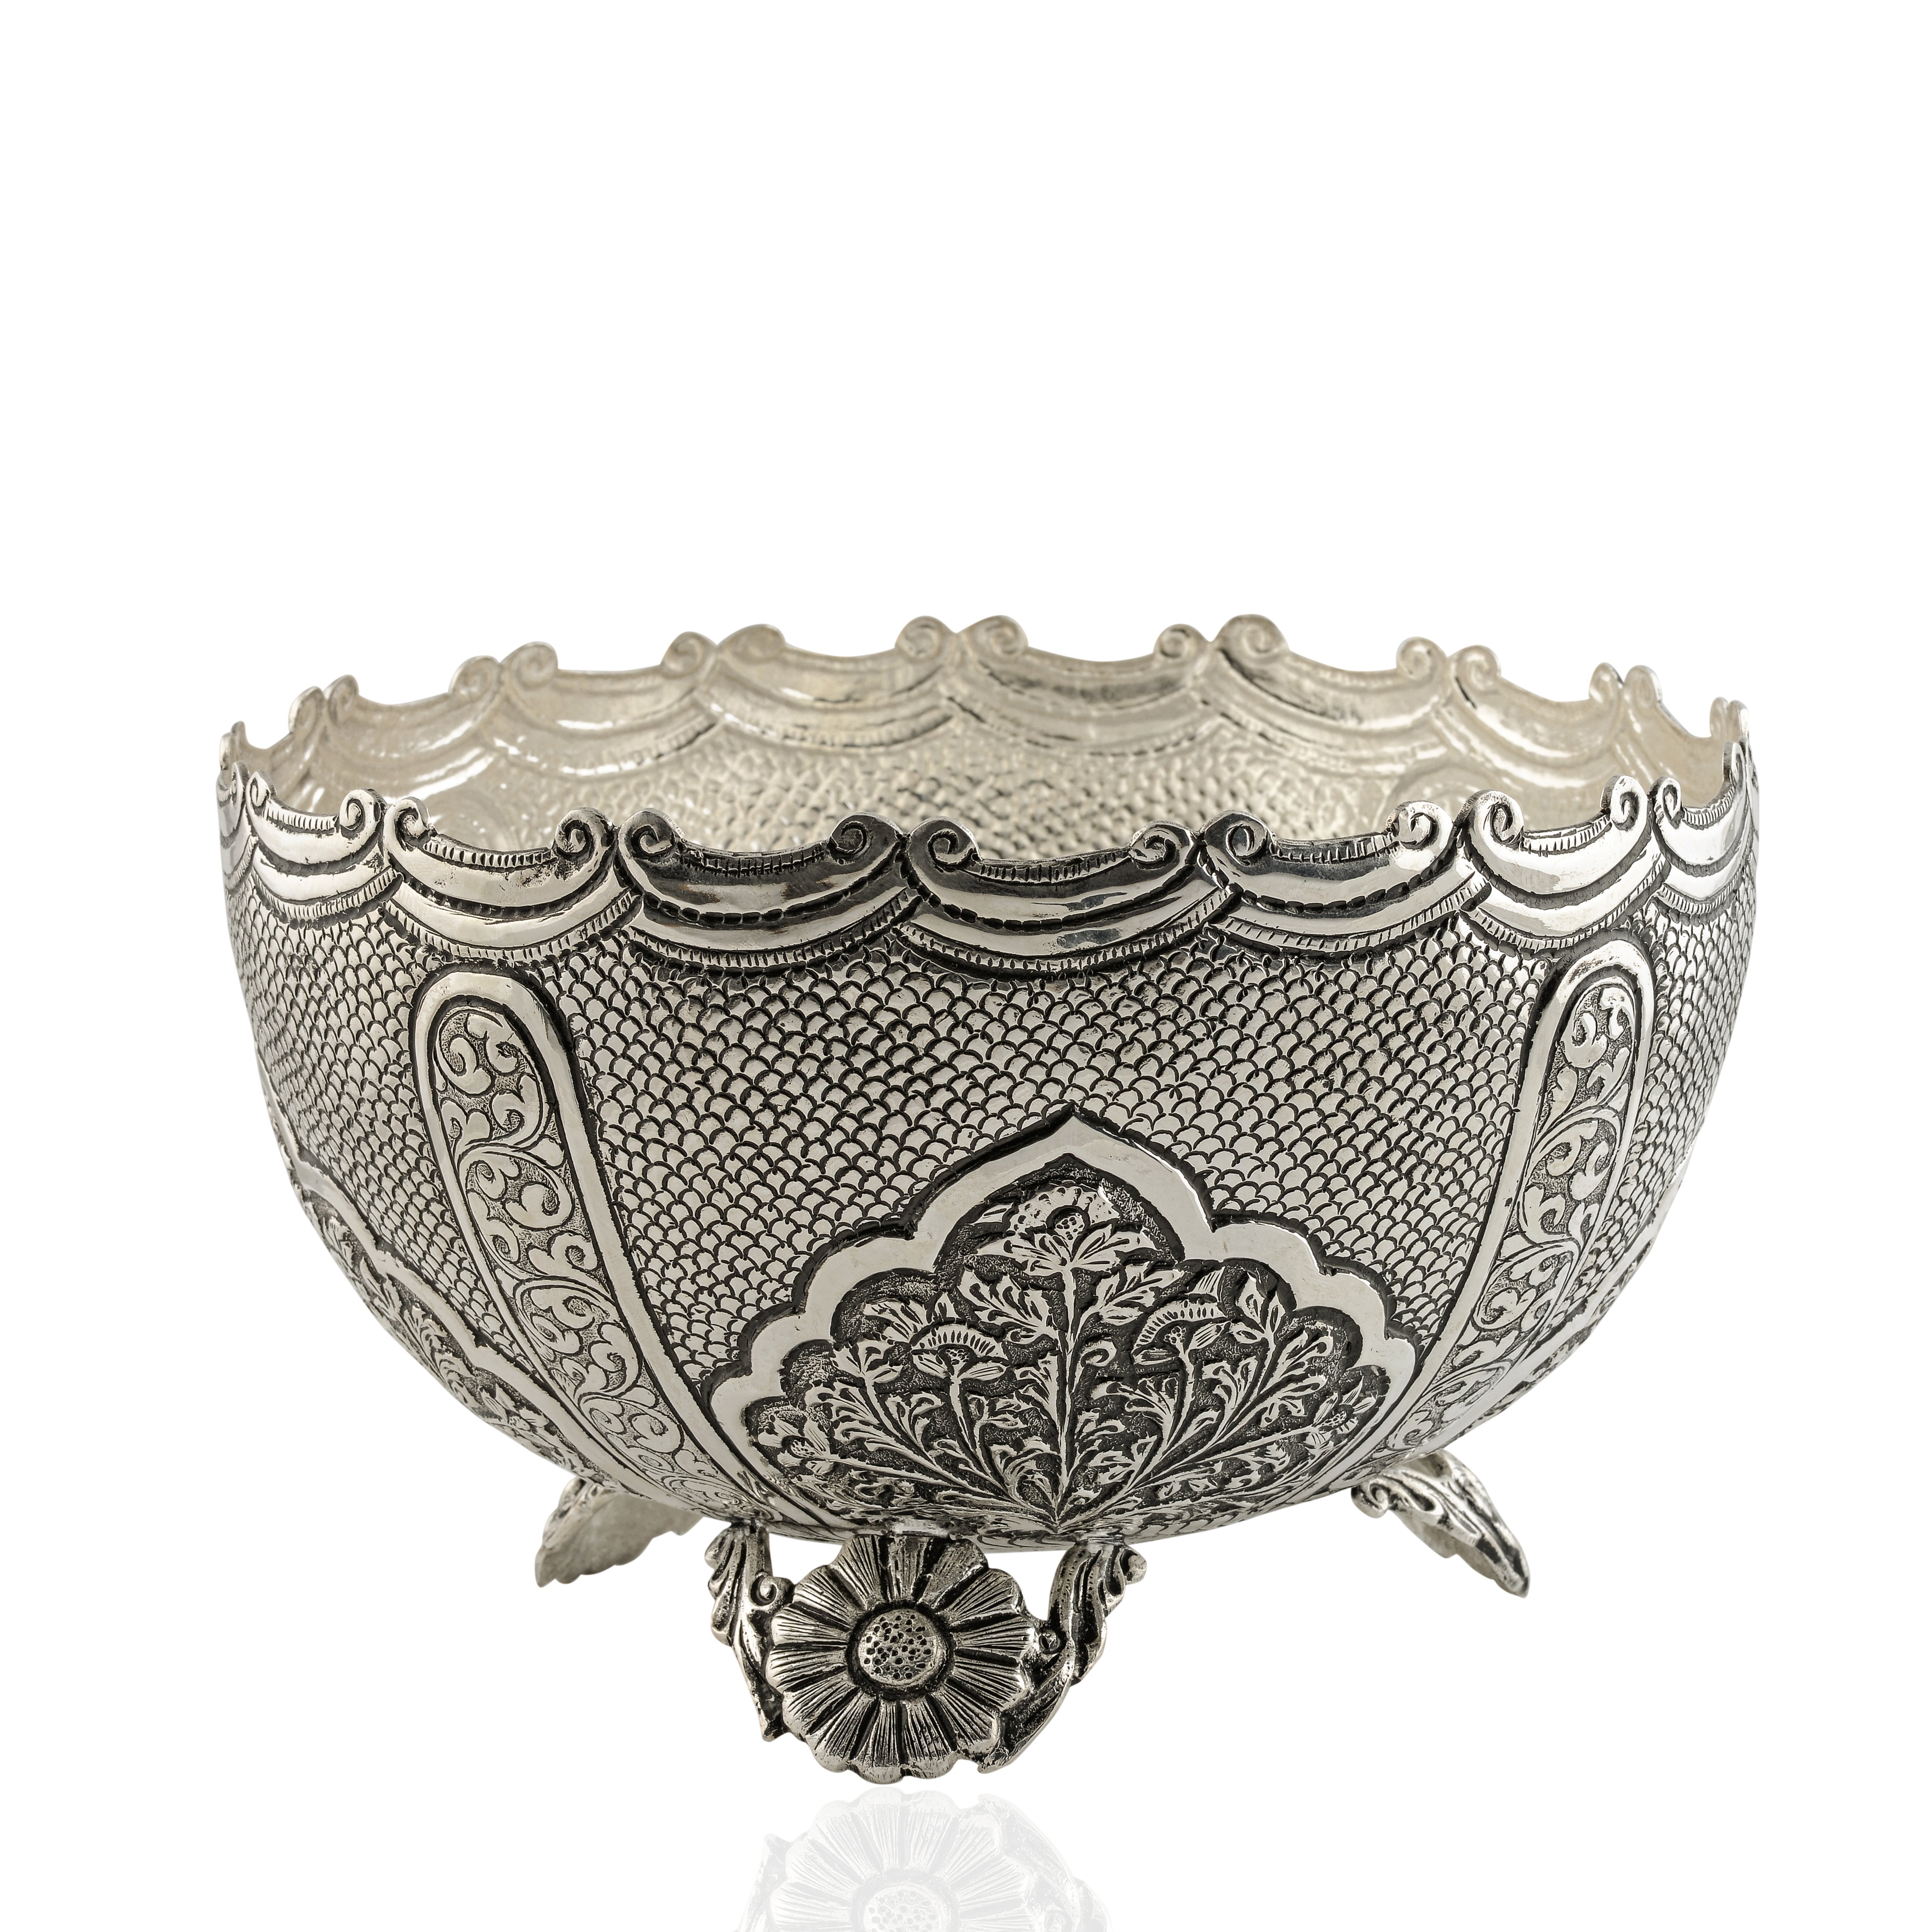 Antique Silver Flower Bowl